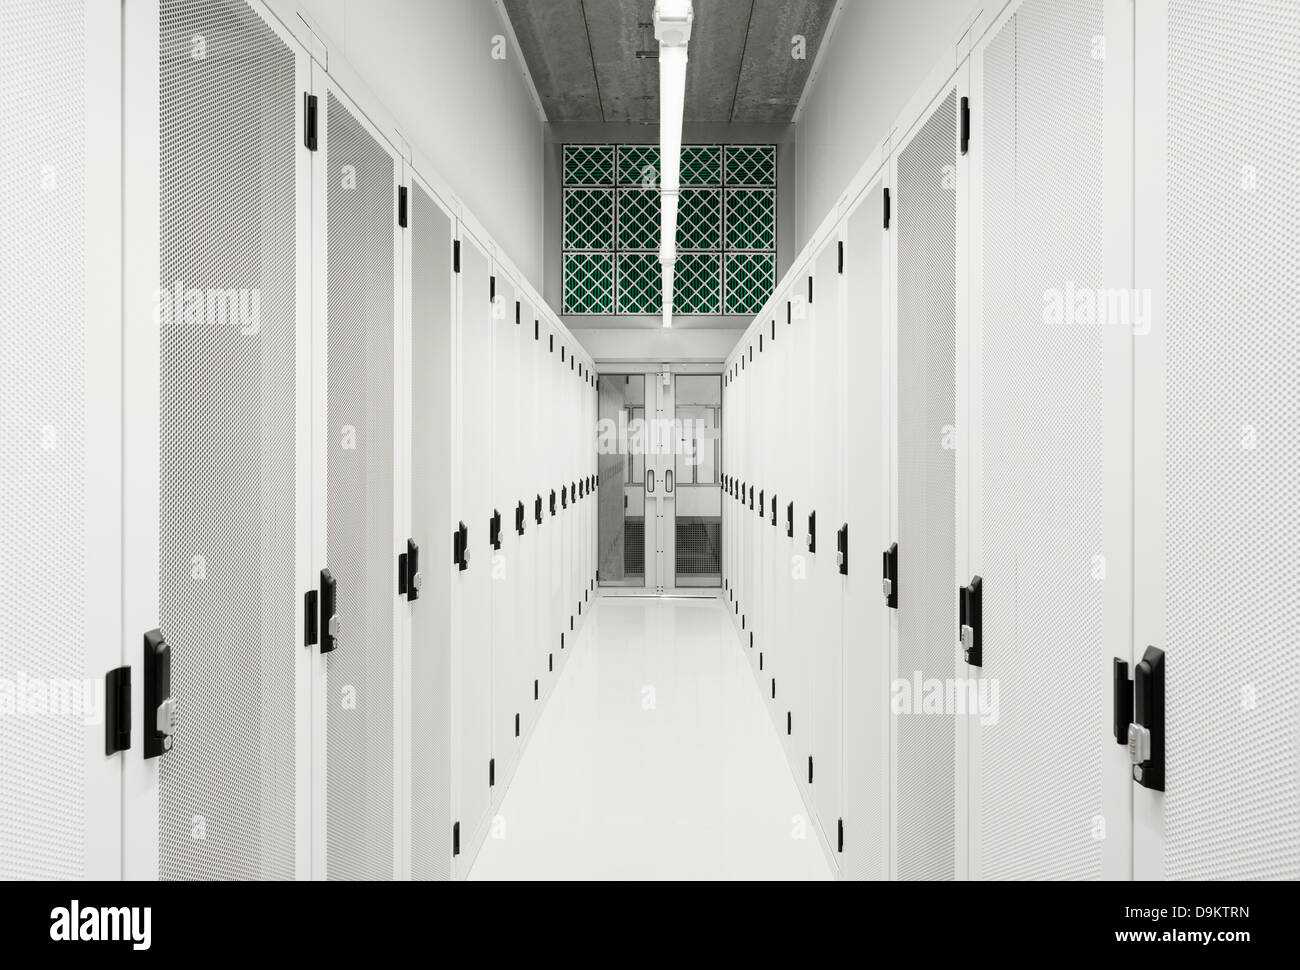 Diminishing perspective of data storage warehouse Stock Photo